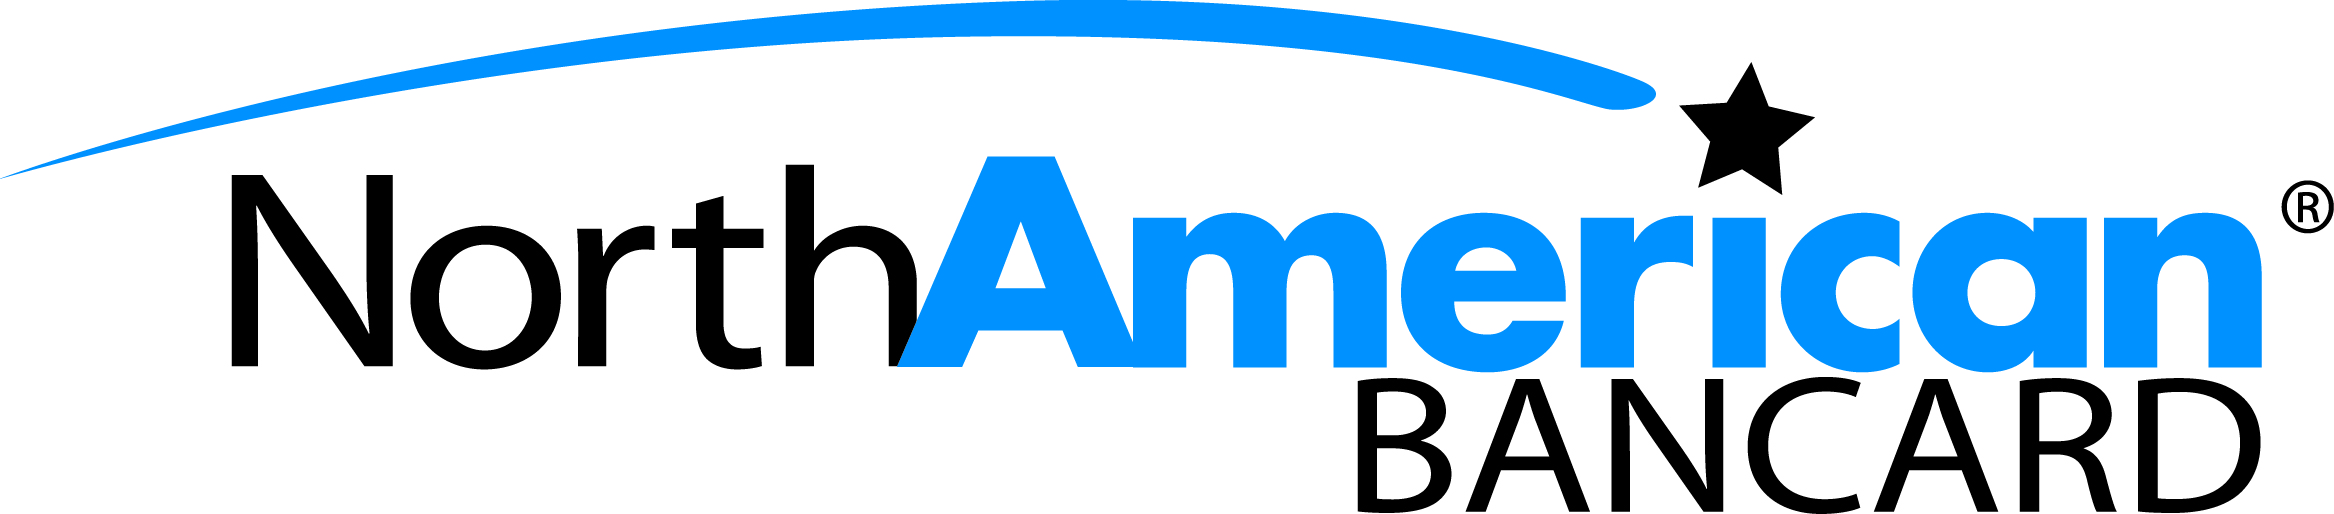 NorthAmerican Bancard Logo